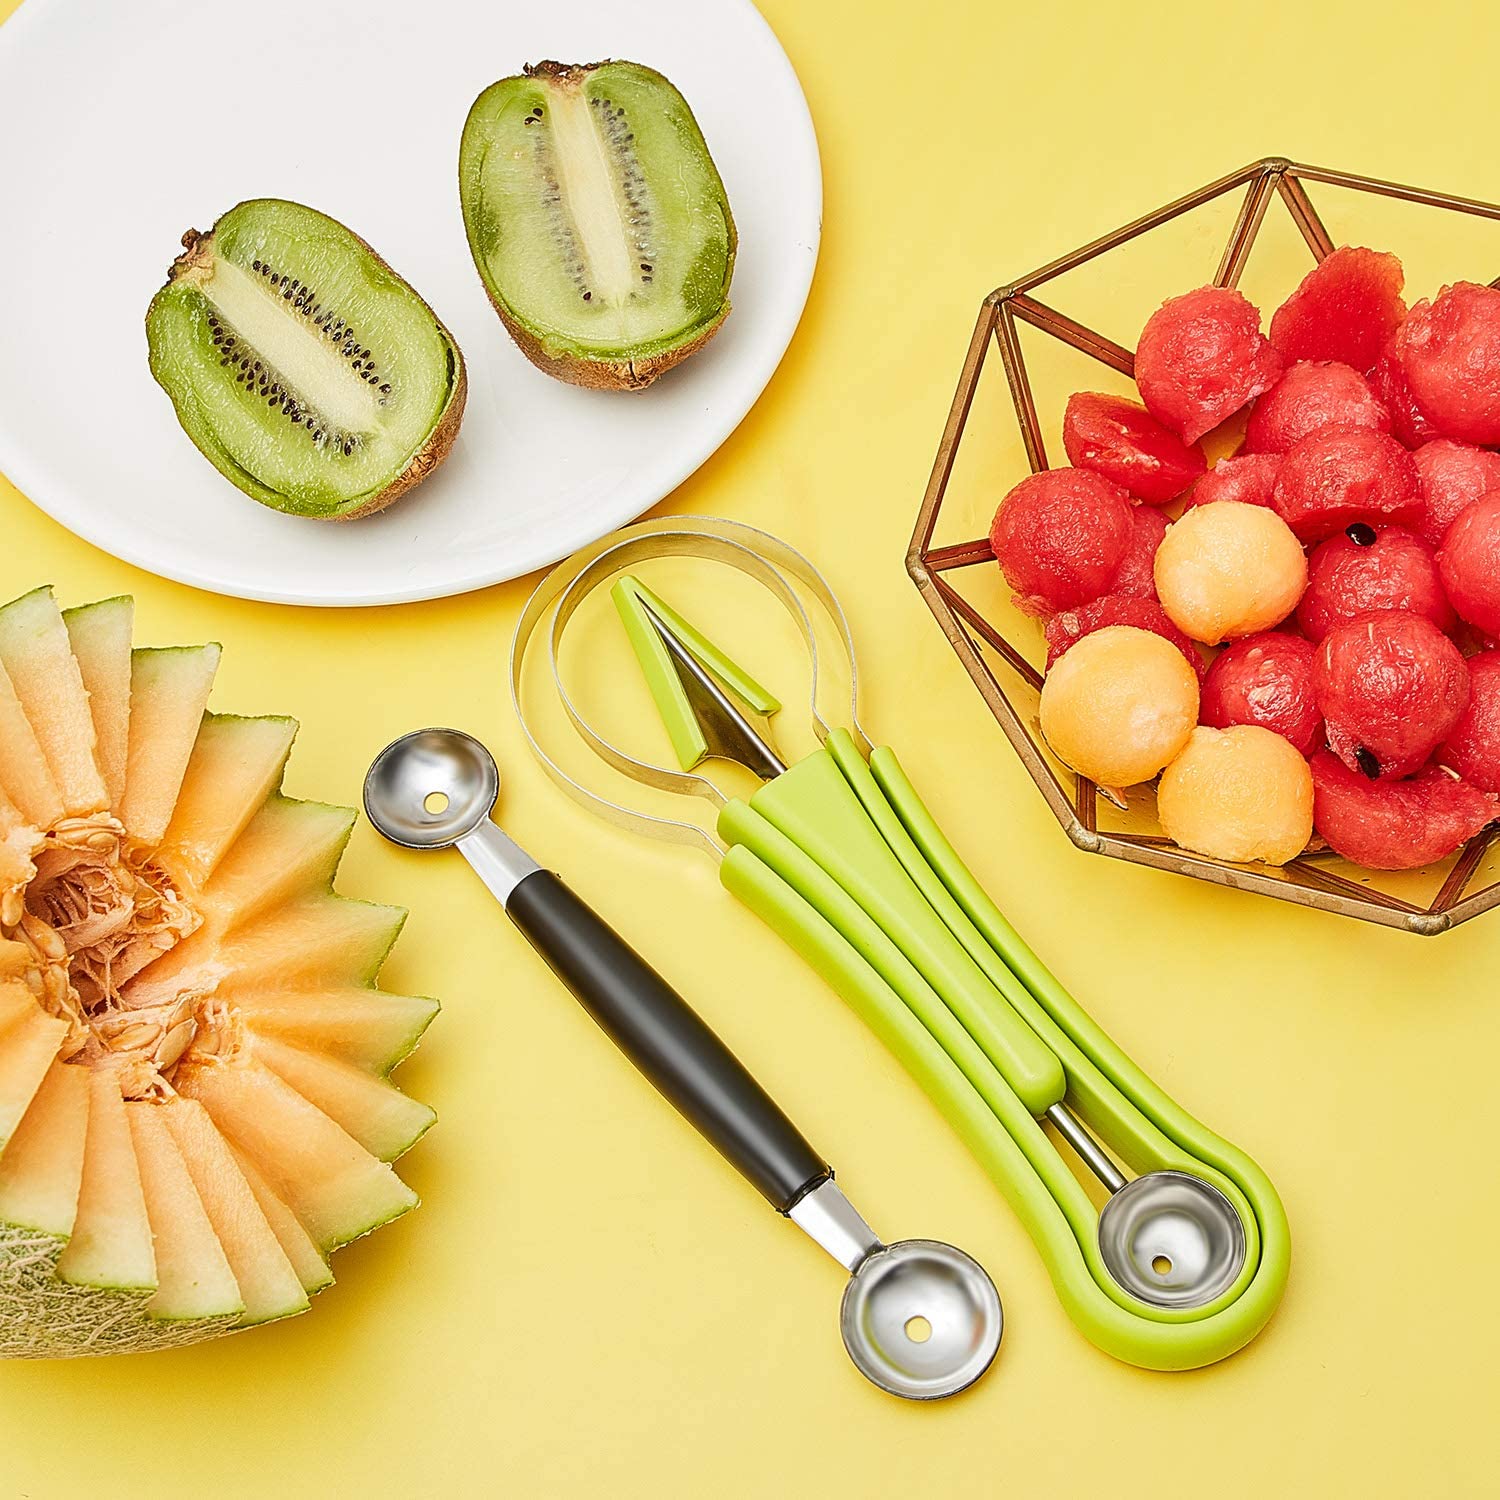 🔥Last Day Promotion 48% OFF - 4 In 1 Fruit Salad Maker Kit (BUY 3 GET 2 FREE NOW)